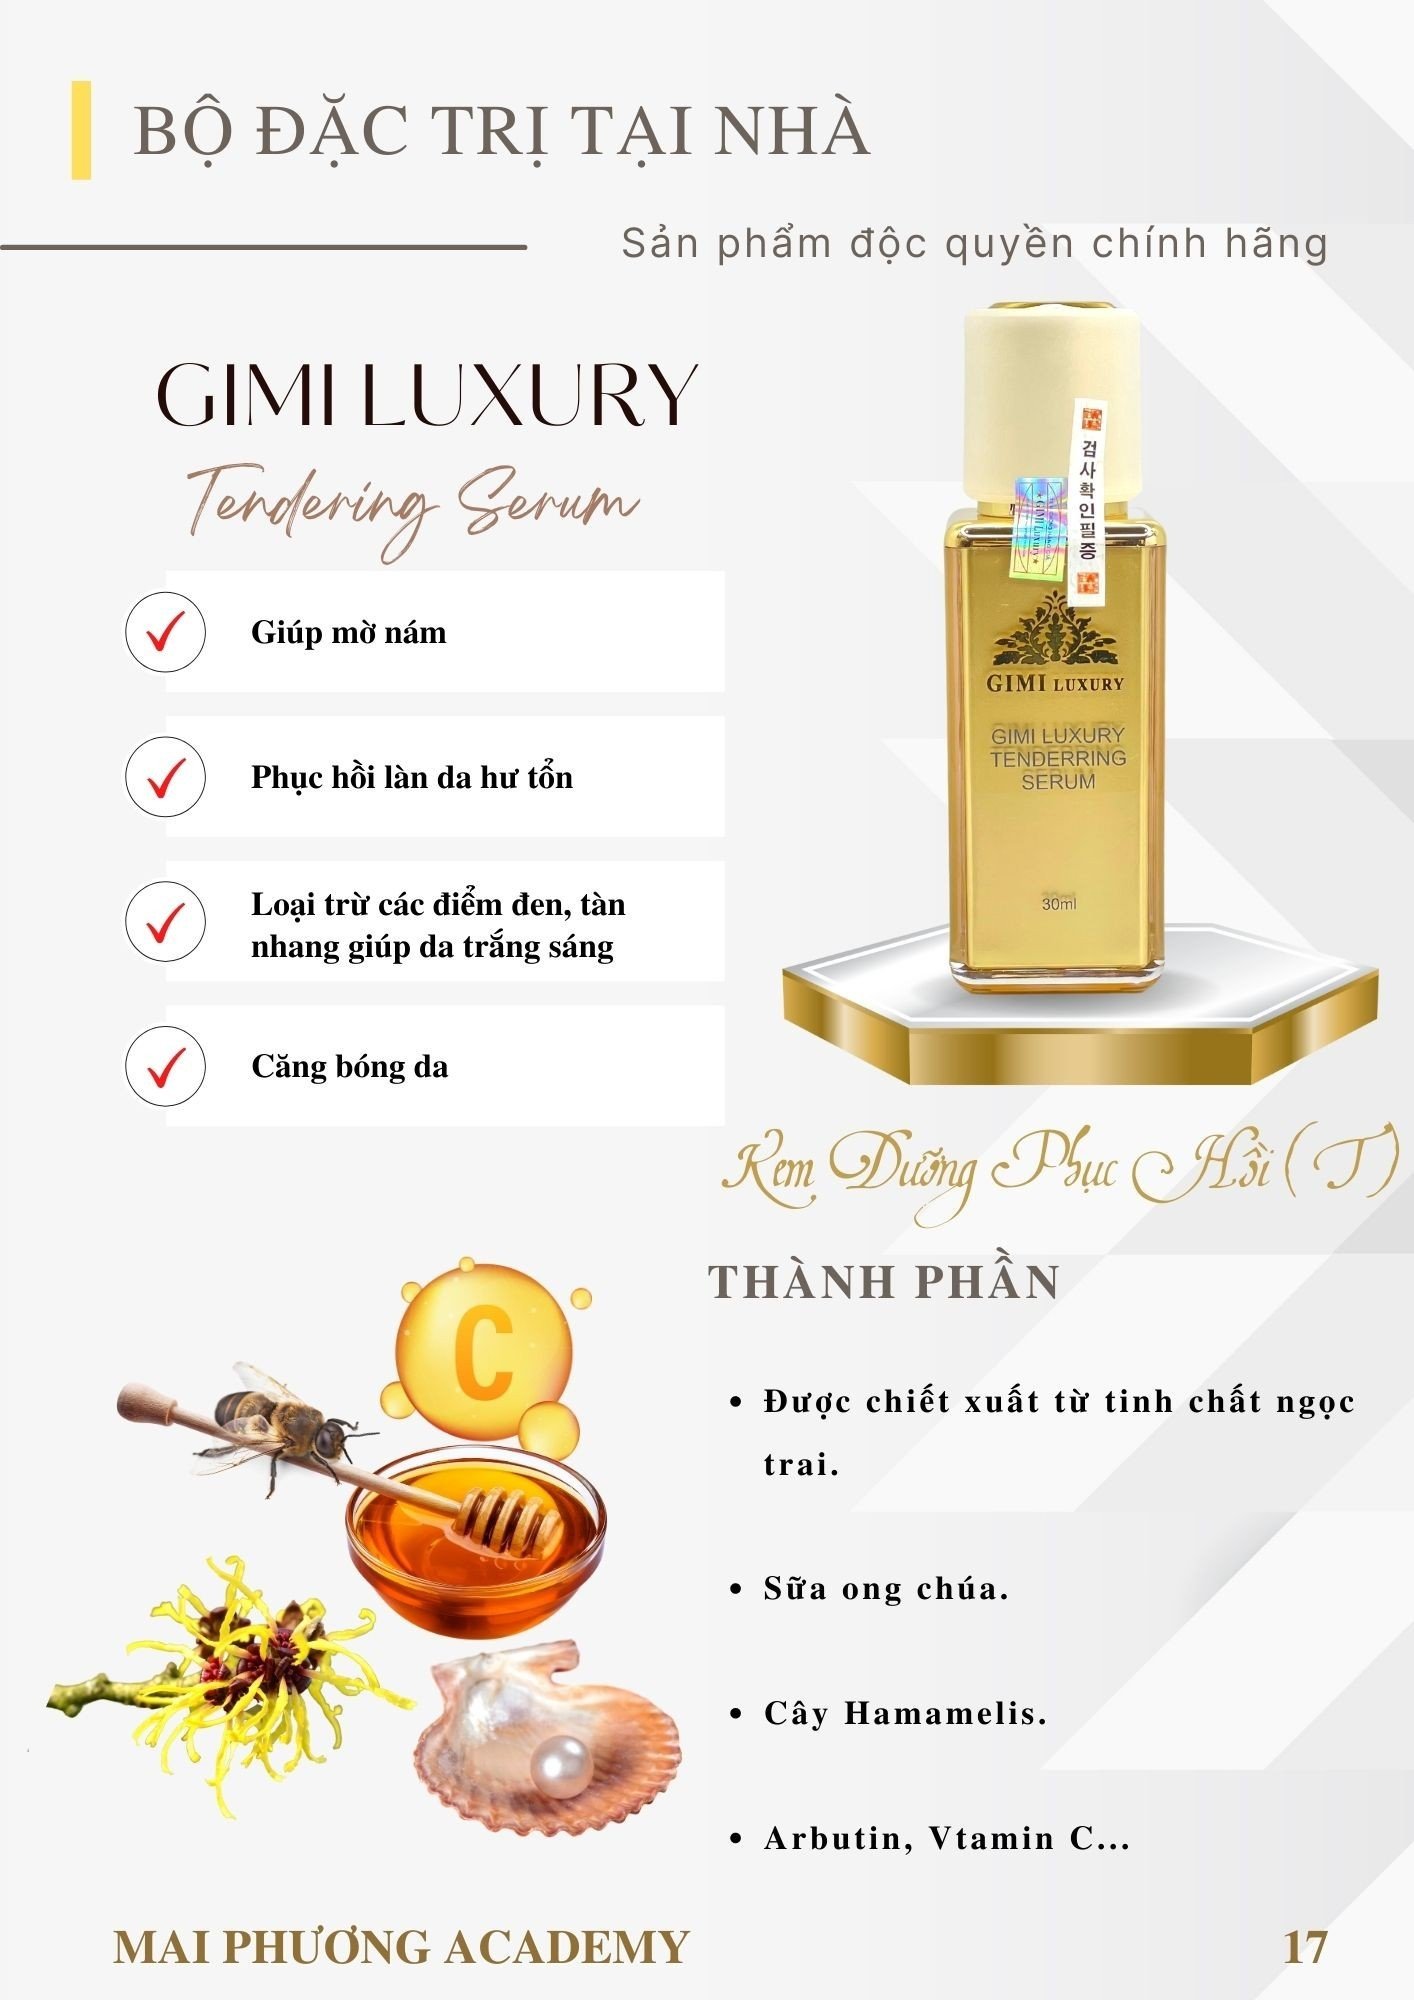 Tendering Serum Gimi Luxury Gold